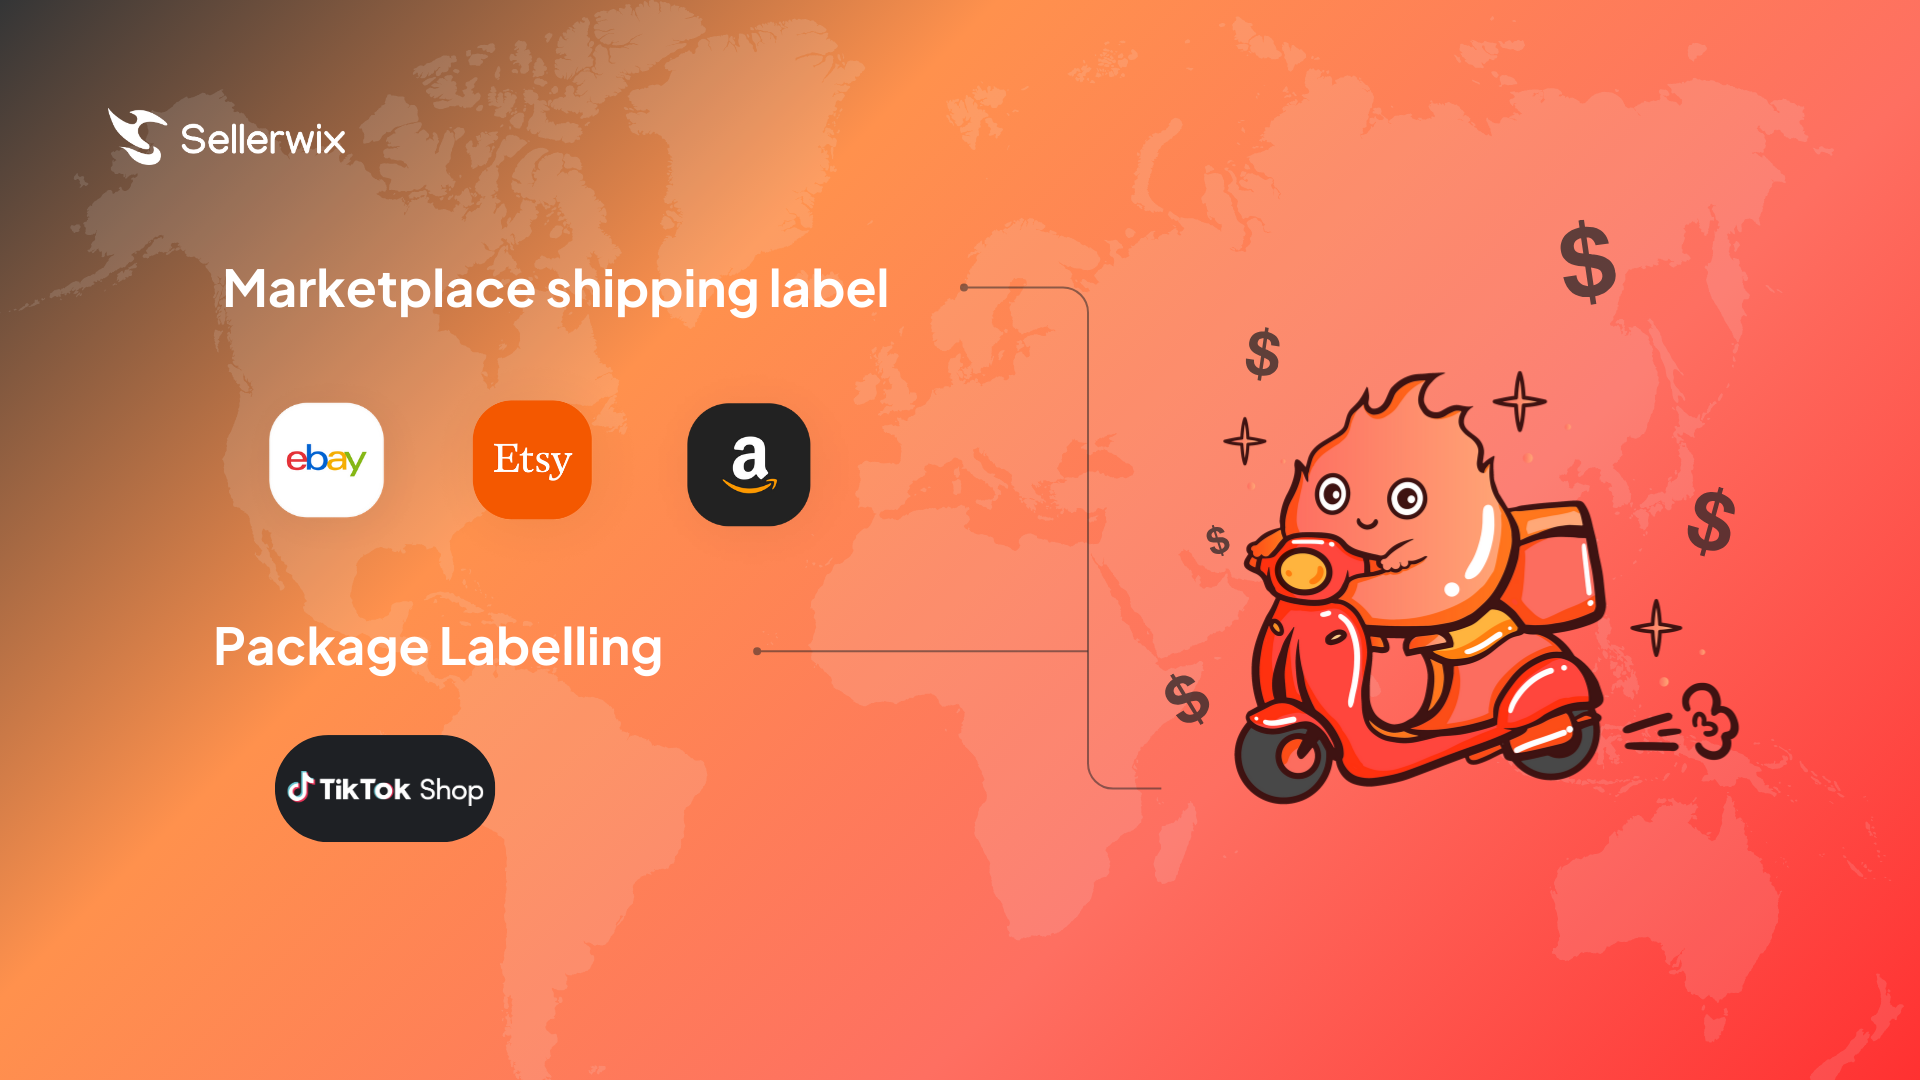 Marketplace Shipping Label